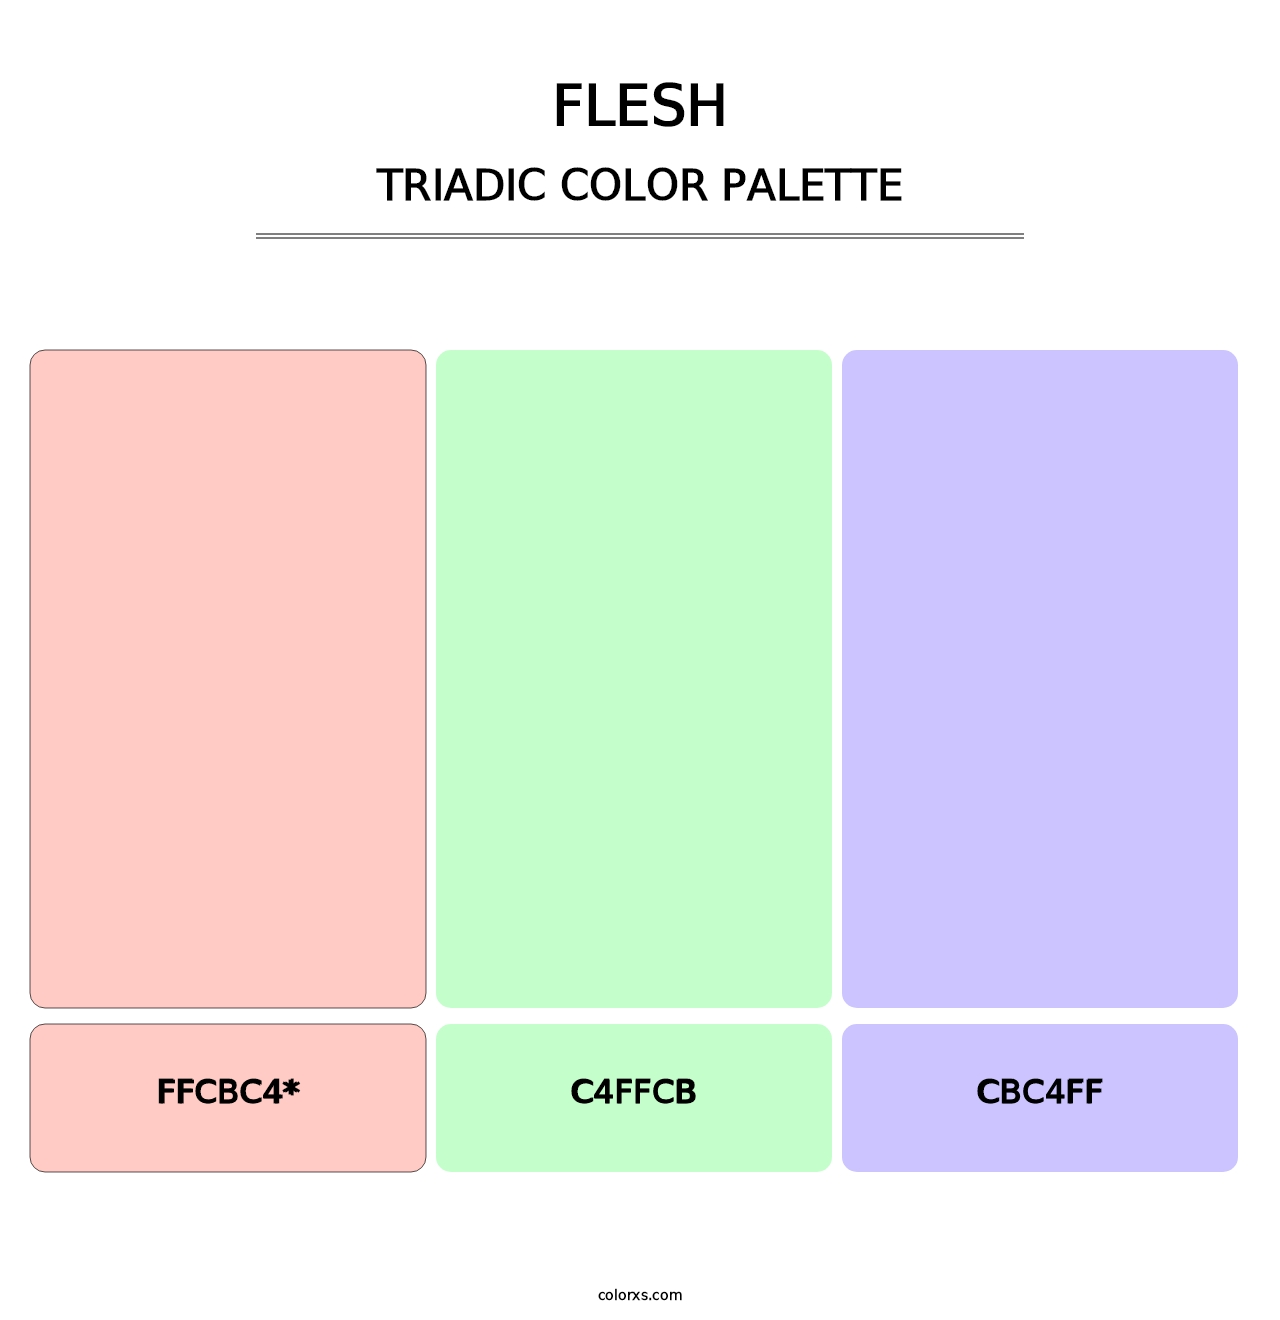 Flesh - Triadic Color Palette